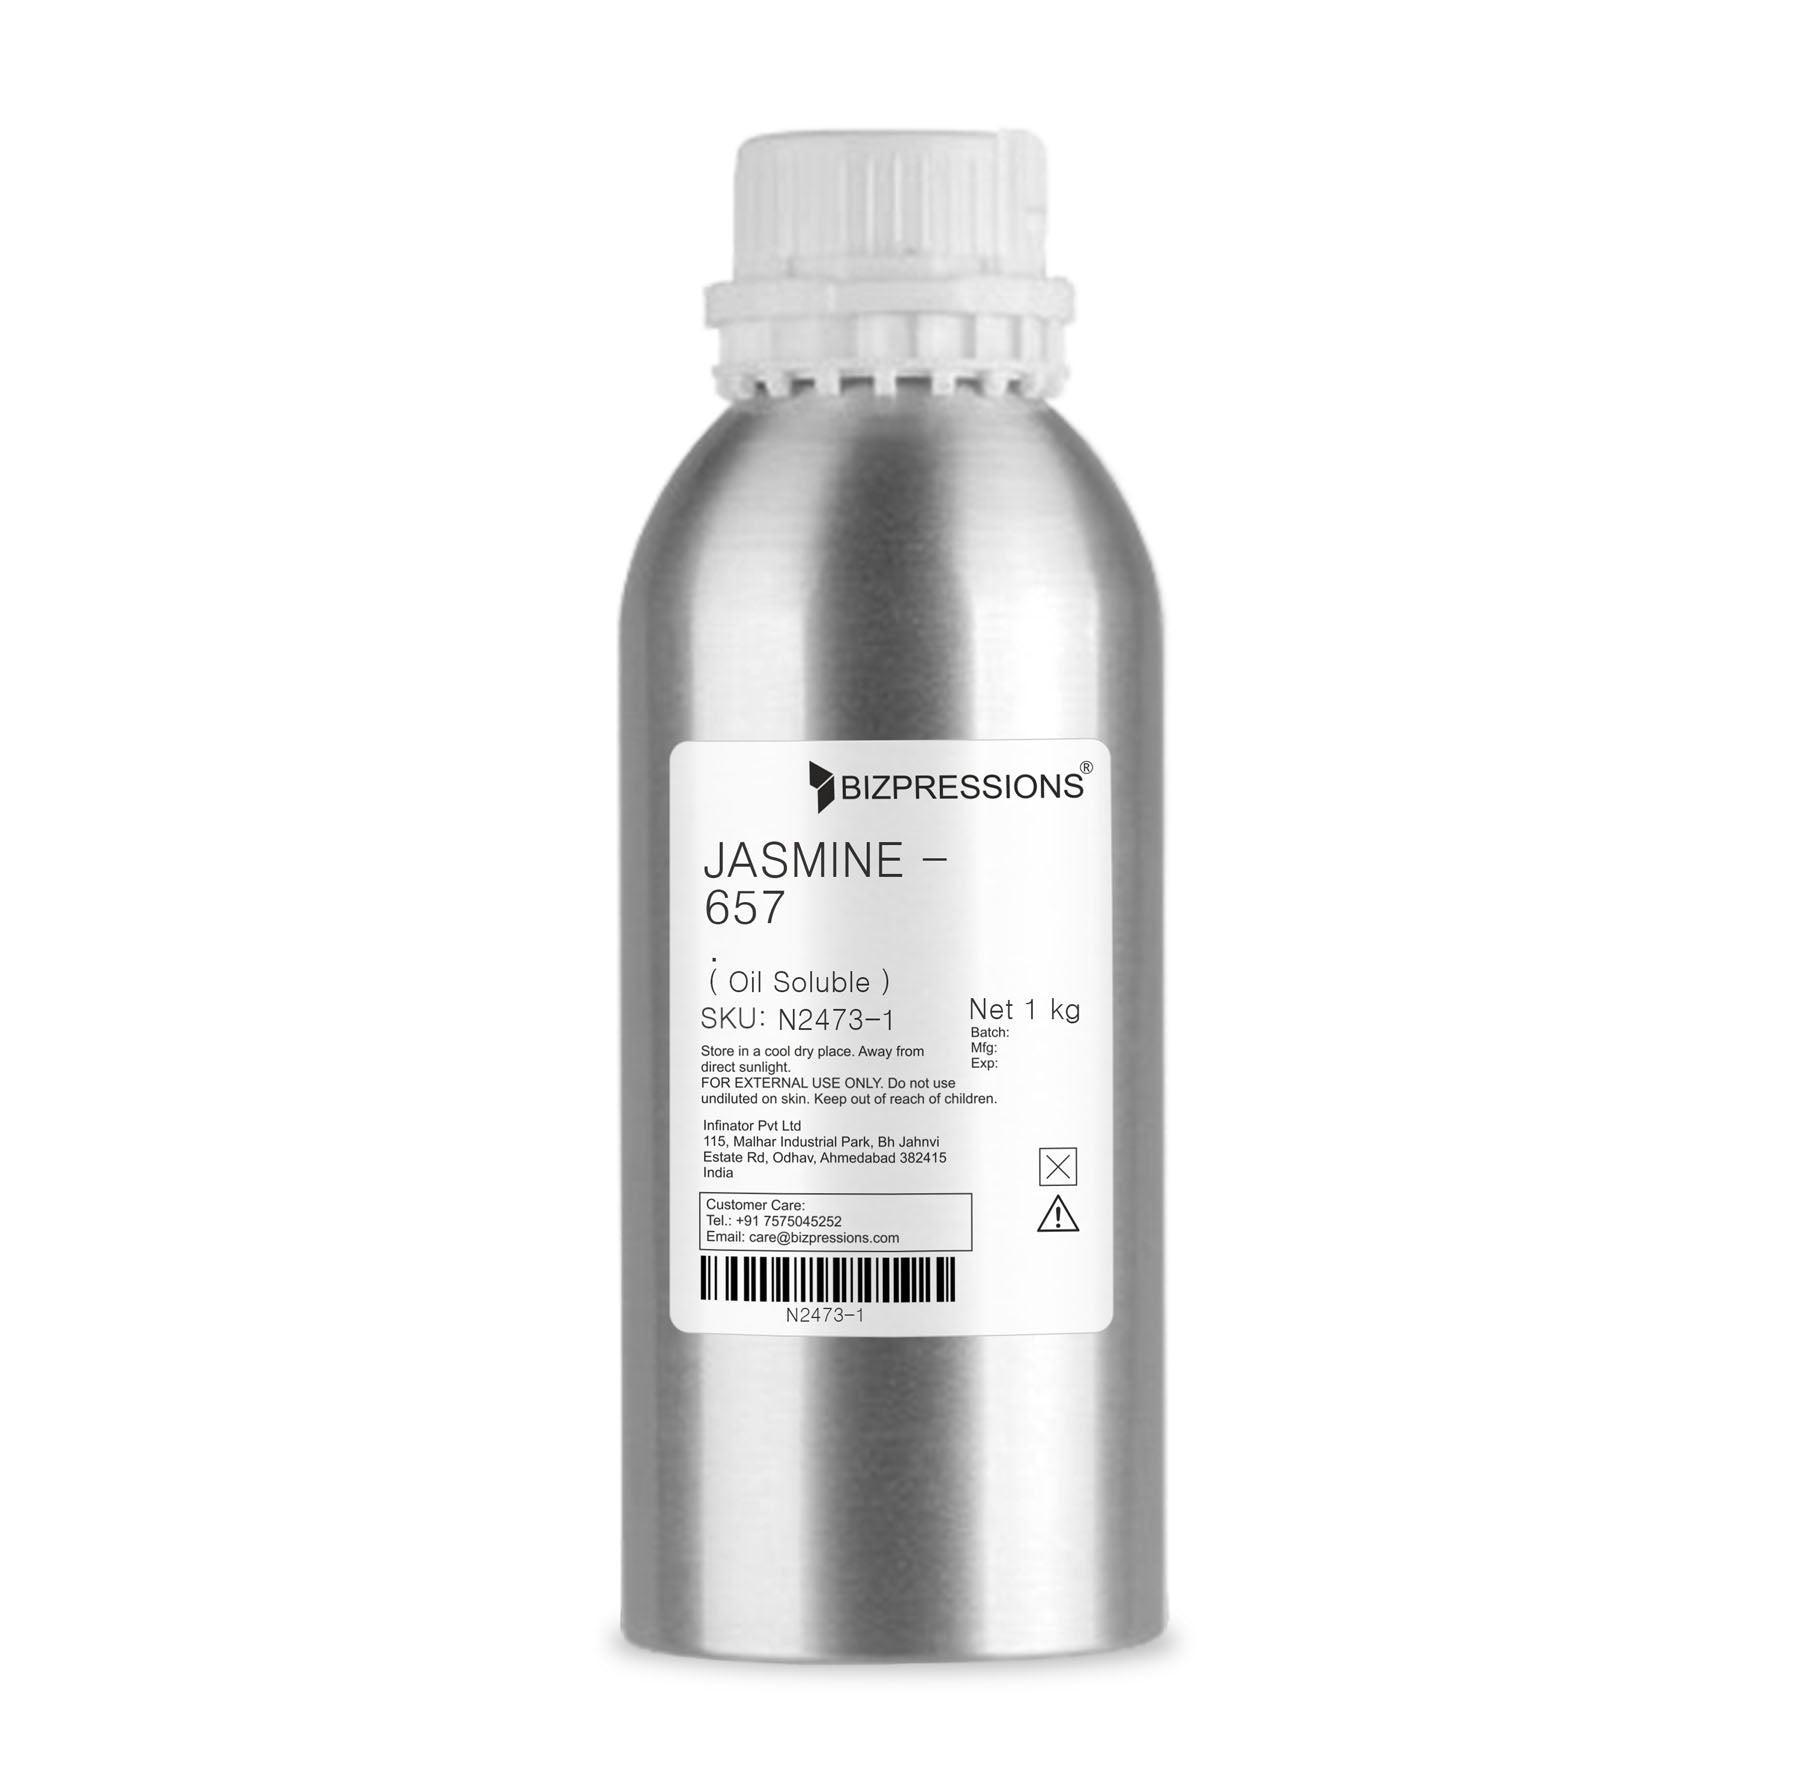 JASMINE - 657 - Fragrance ( Oil Soluble ) - 1 kg